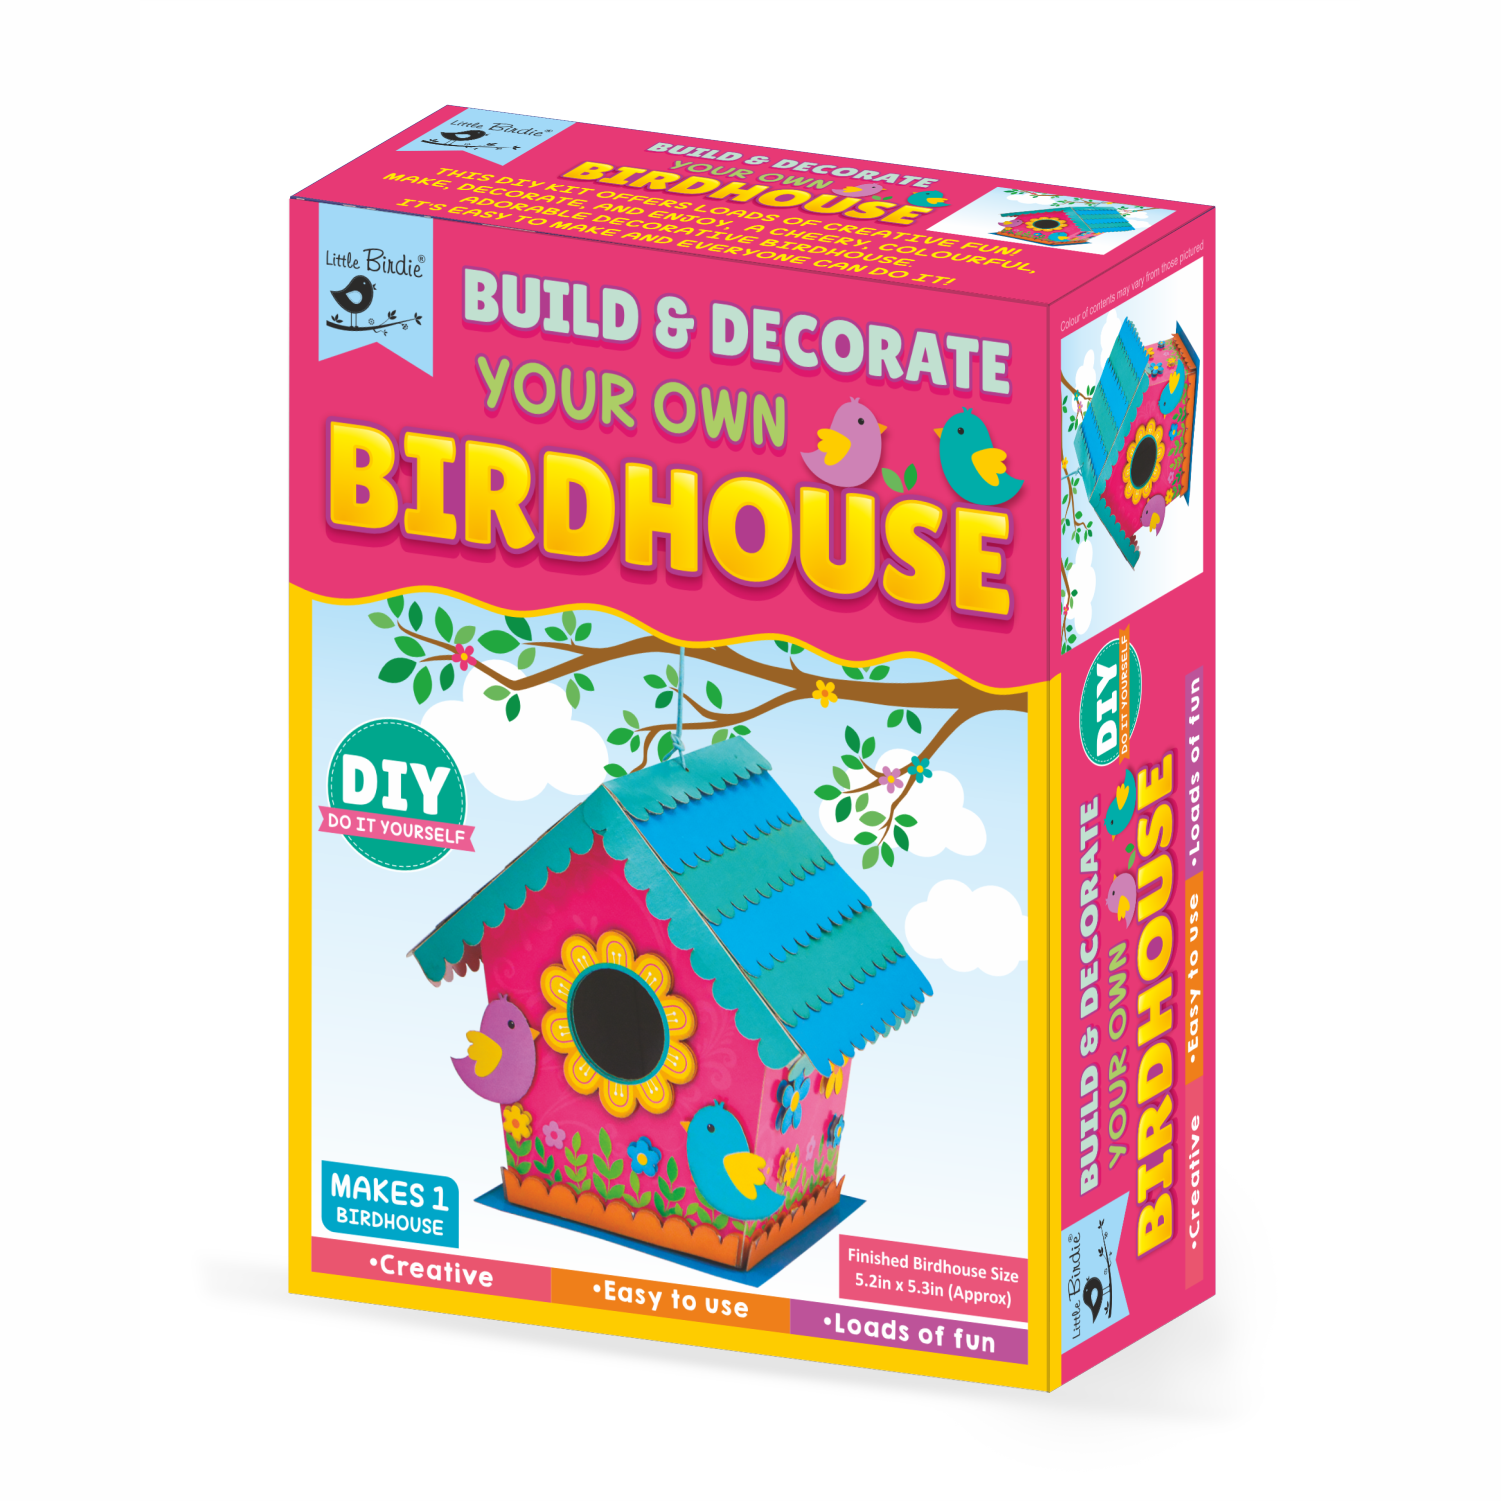 Diy Build & Decorate Your Own Bird House Kit 1 Box